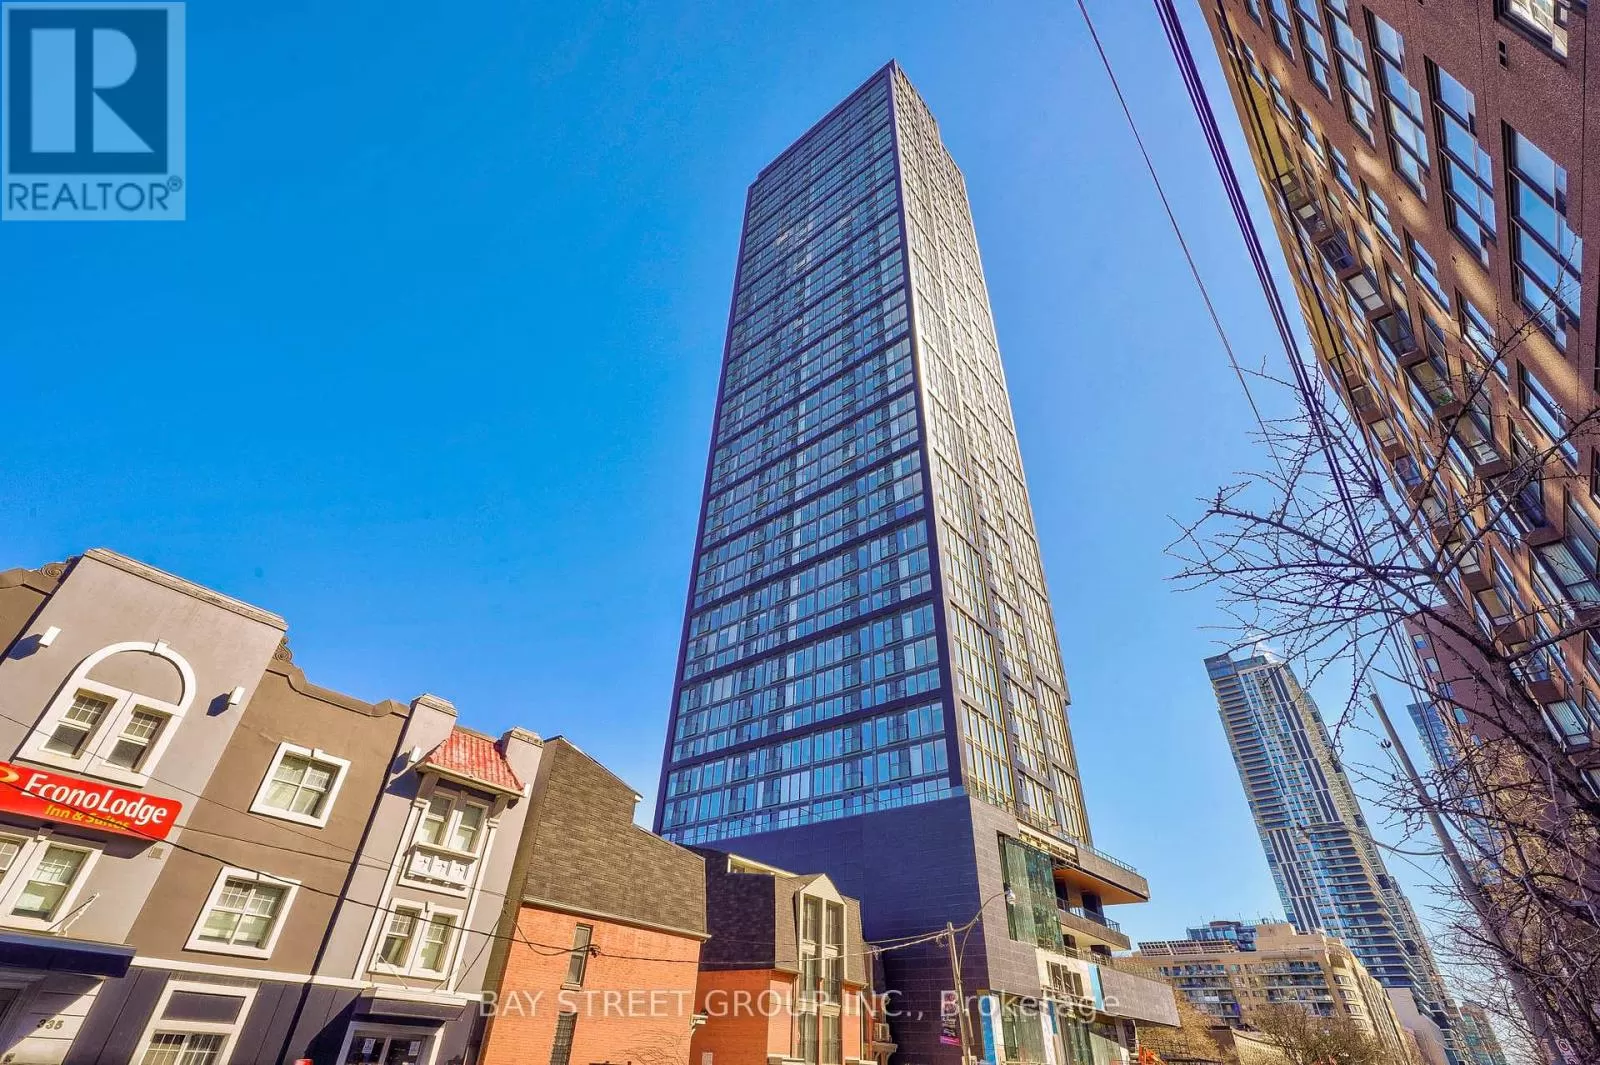 Apartment for rent: 1715 - 319 Jarvis Street, Toronto, Ontario M5B 0C8